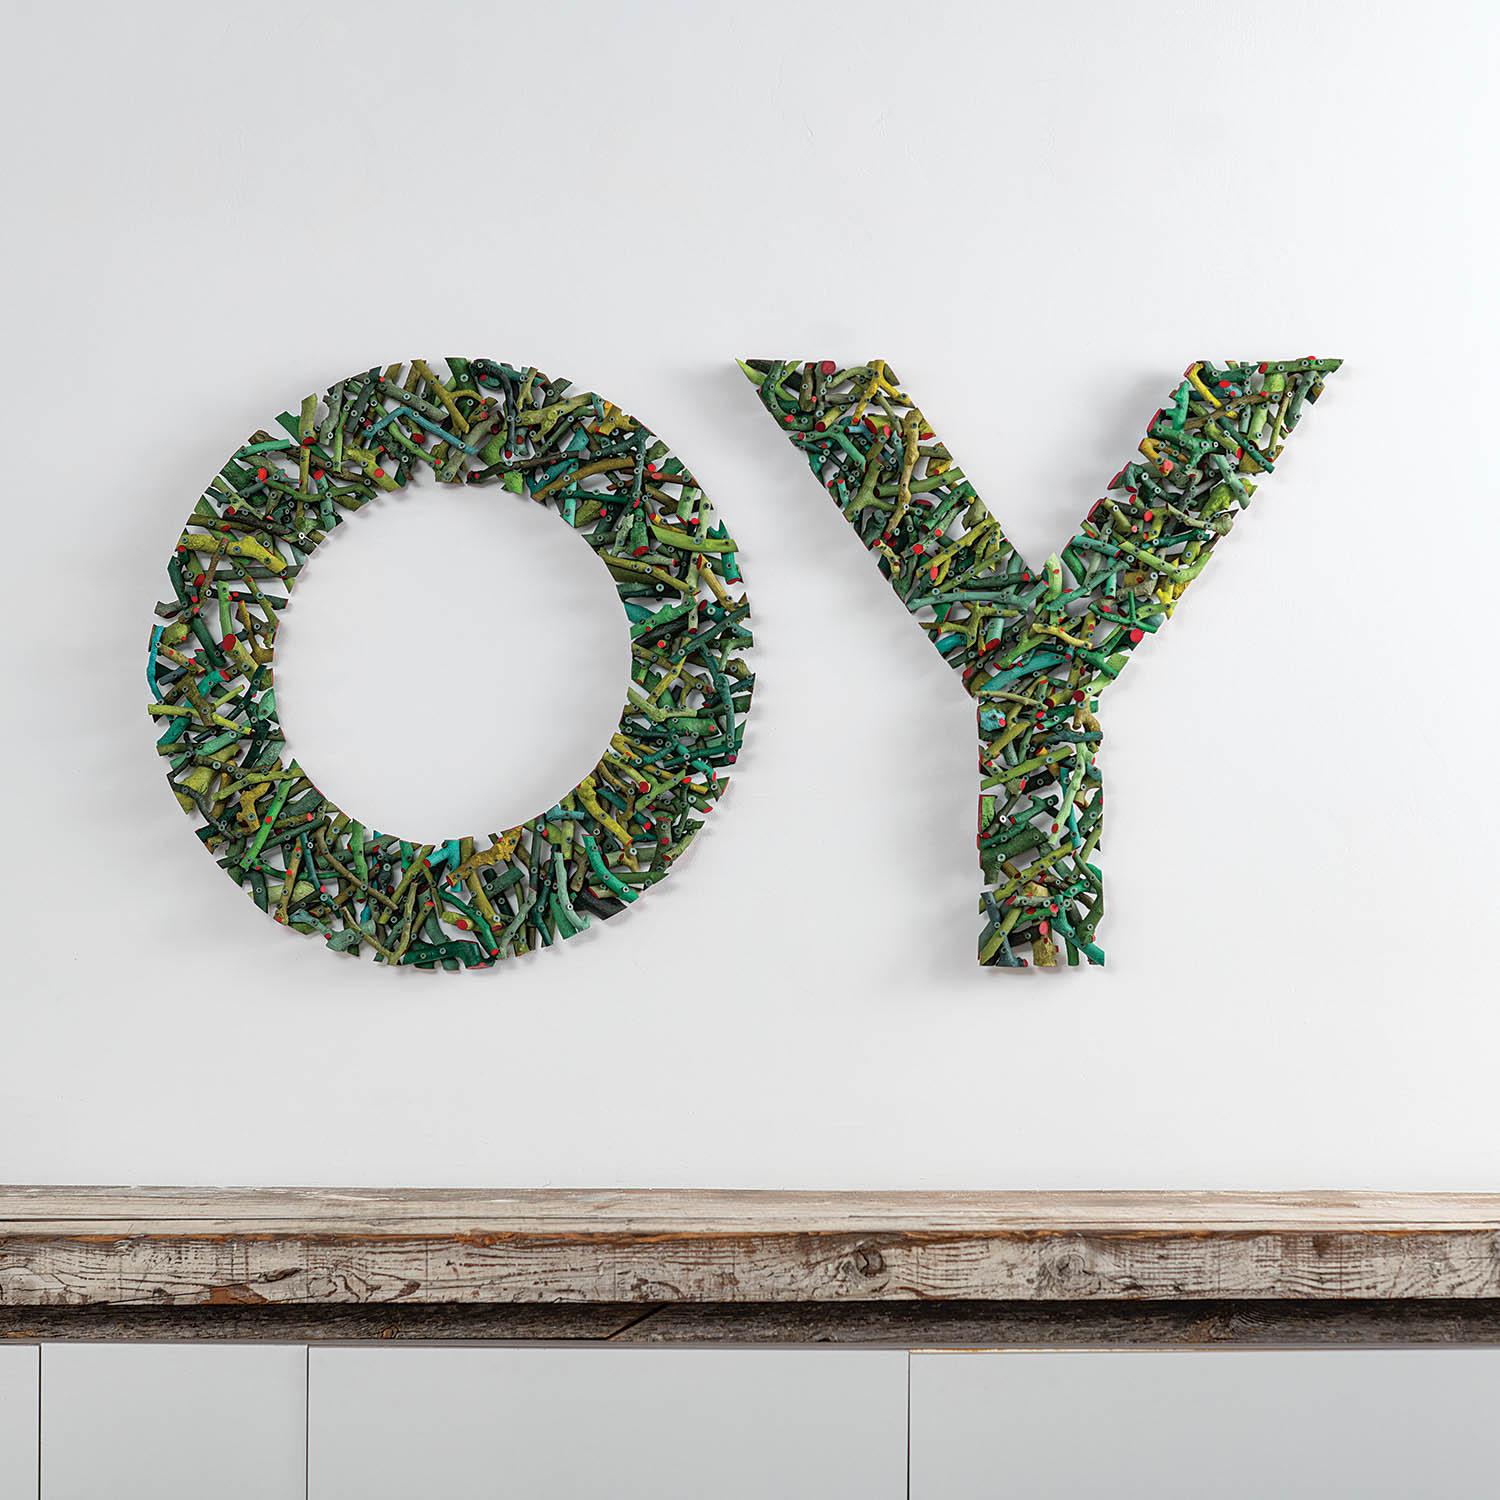 ""Deviation (OY)" Gyngy Laky, zeitgenössische texturierte Skulptur aus Mischtechnik – Mixed Media Art von Gyöngy Laky